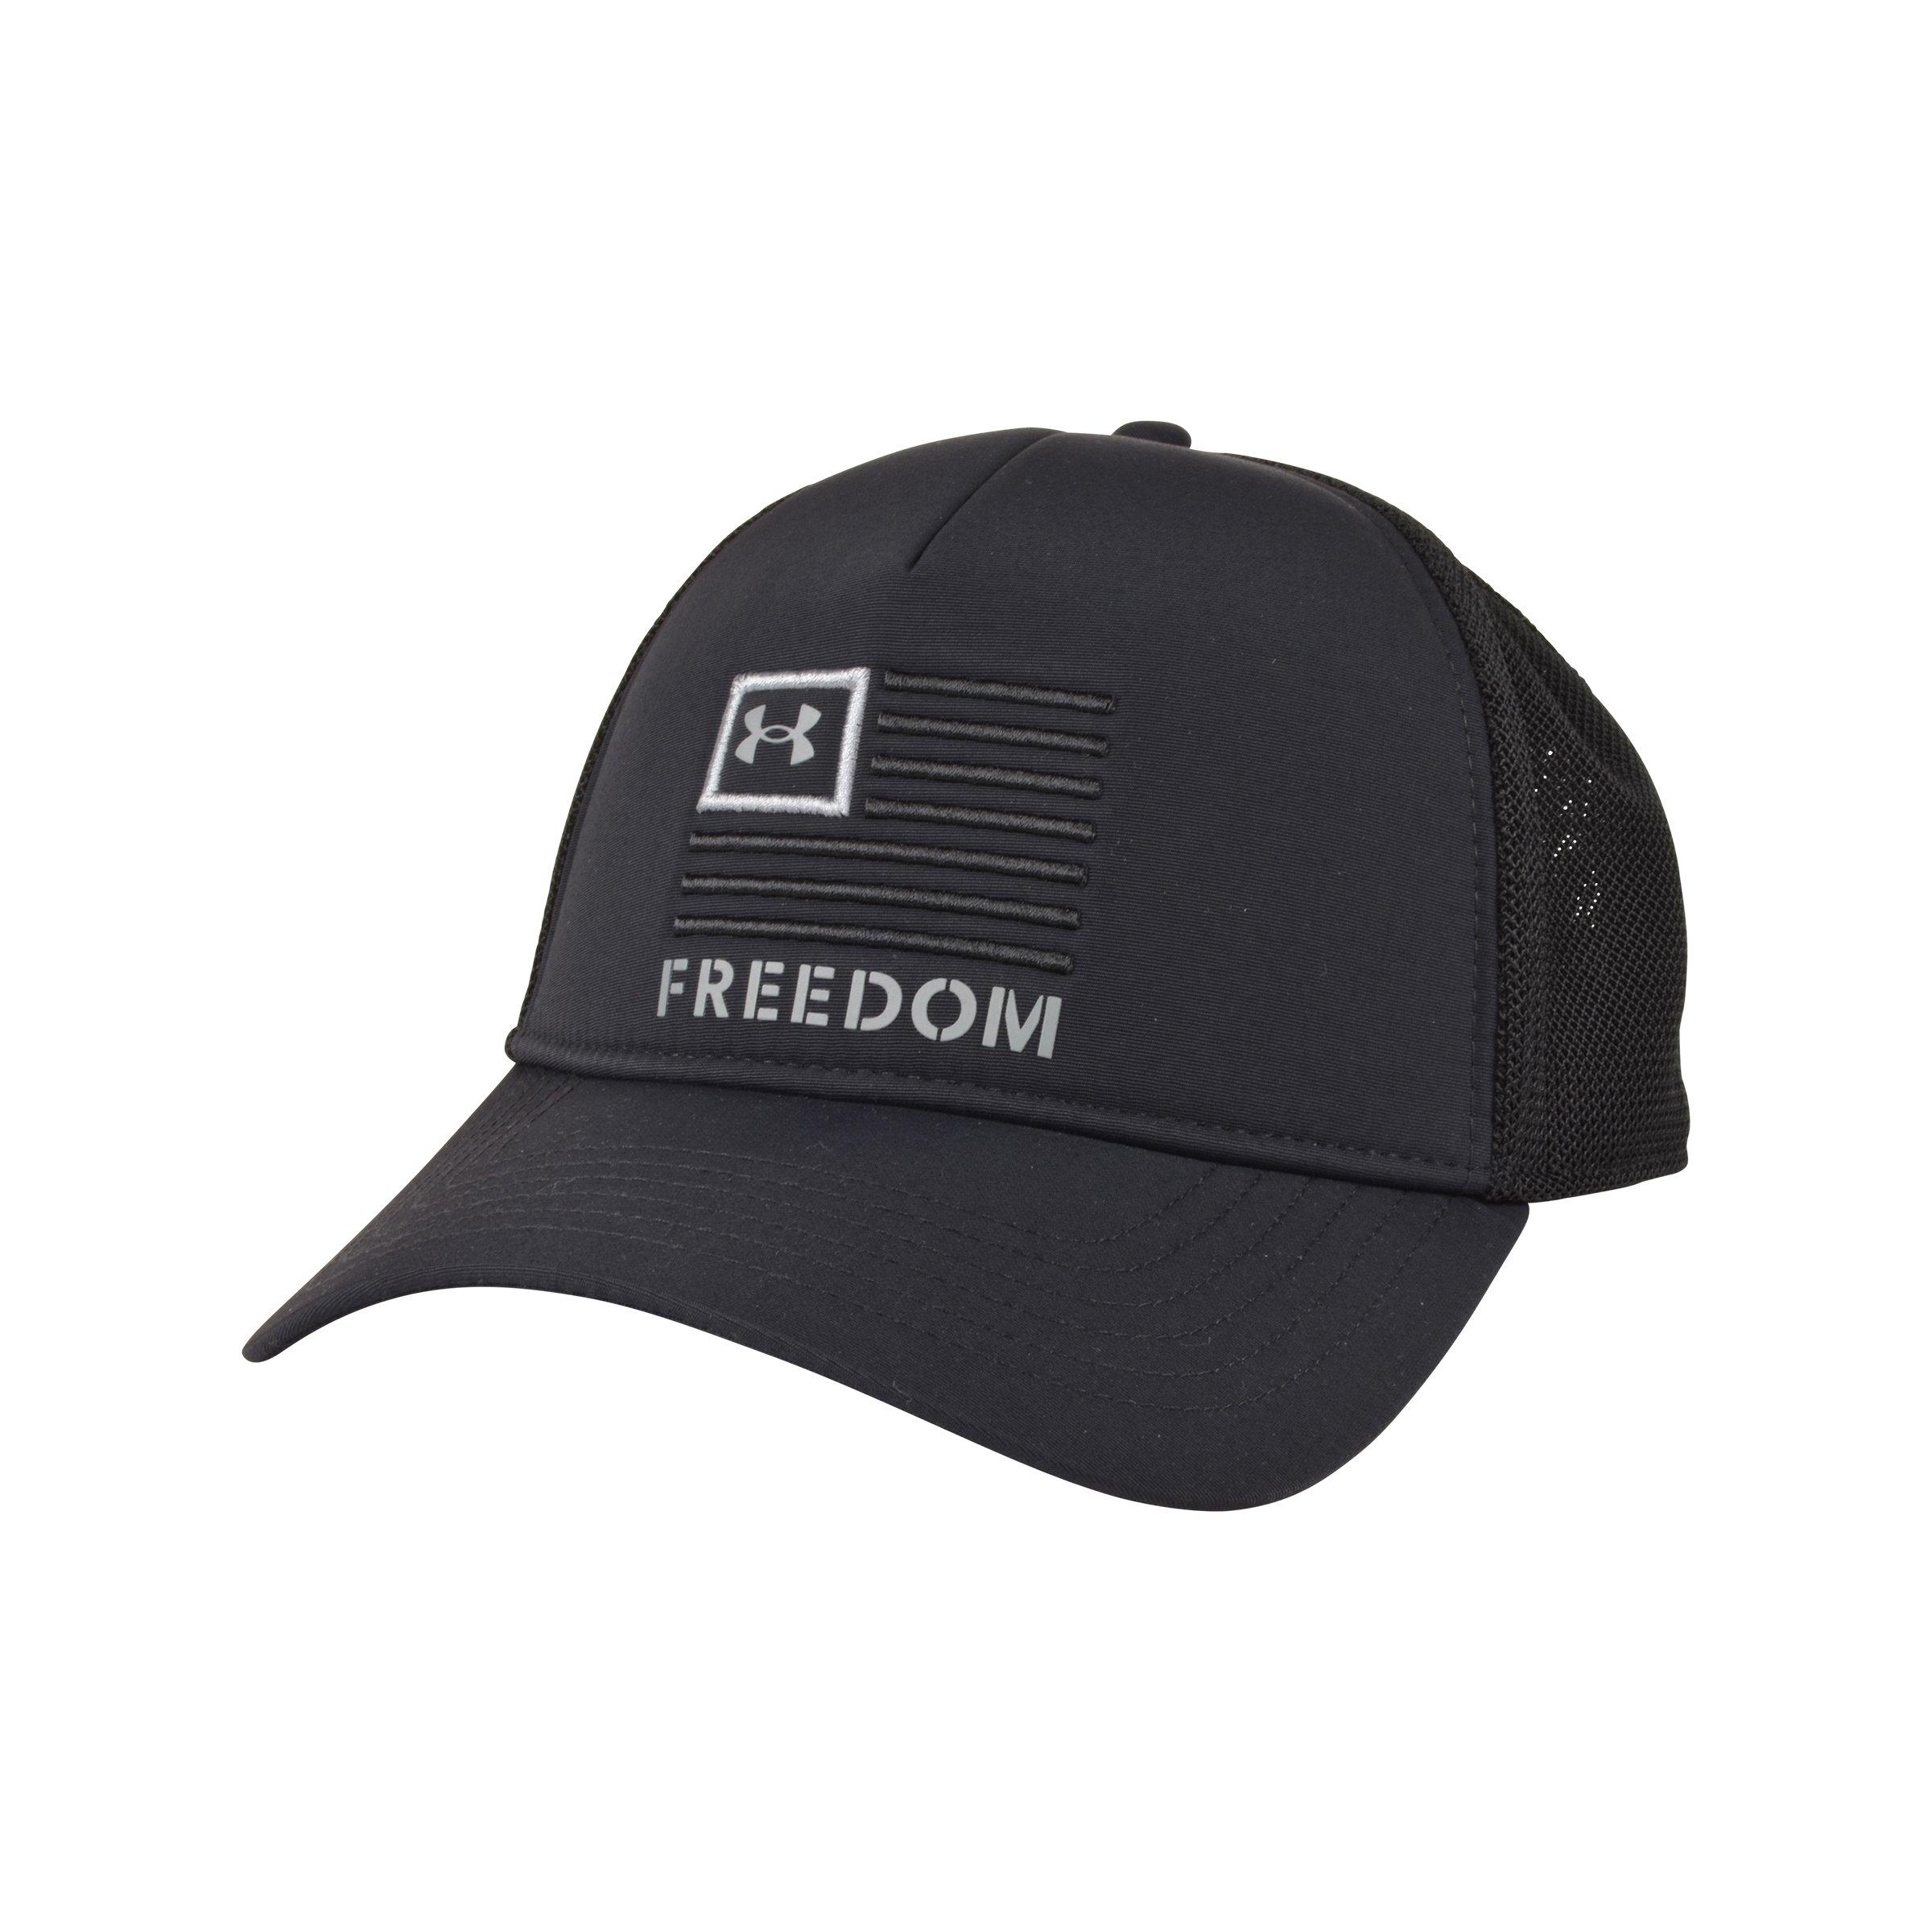 Under Armour Men's Freedom Trucker Snapback Hat - Black/Steel